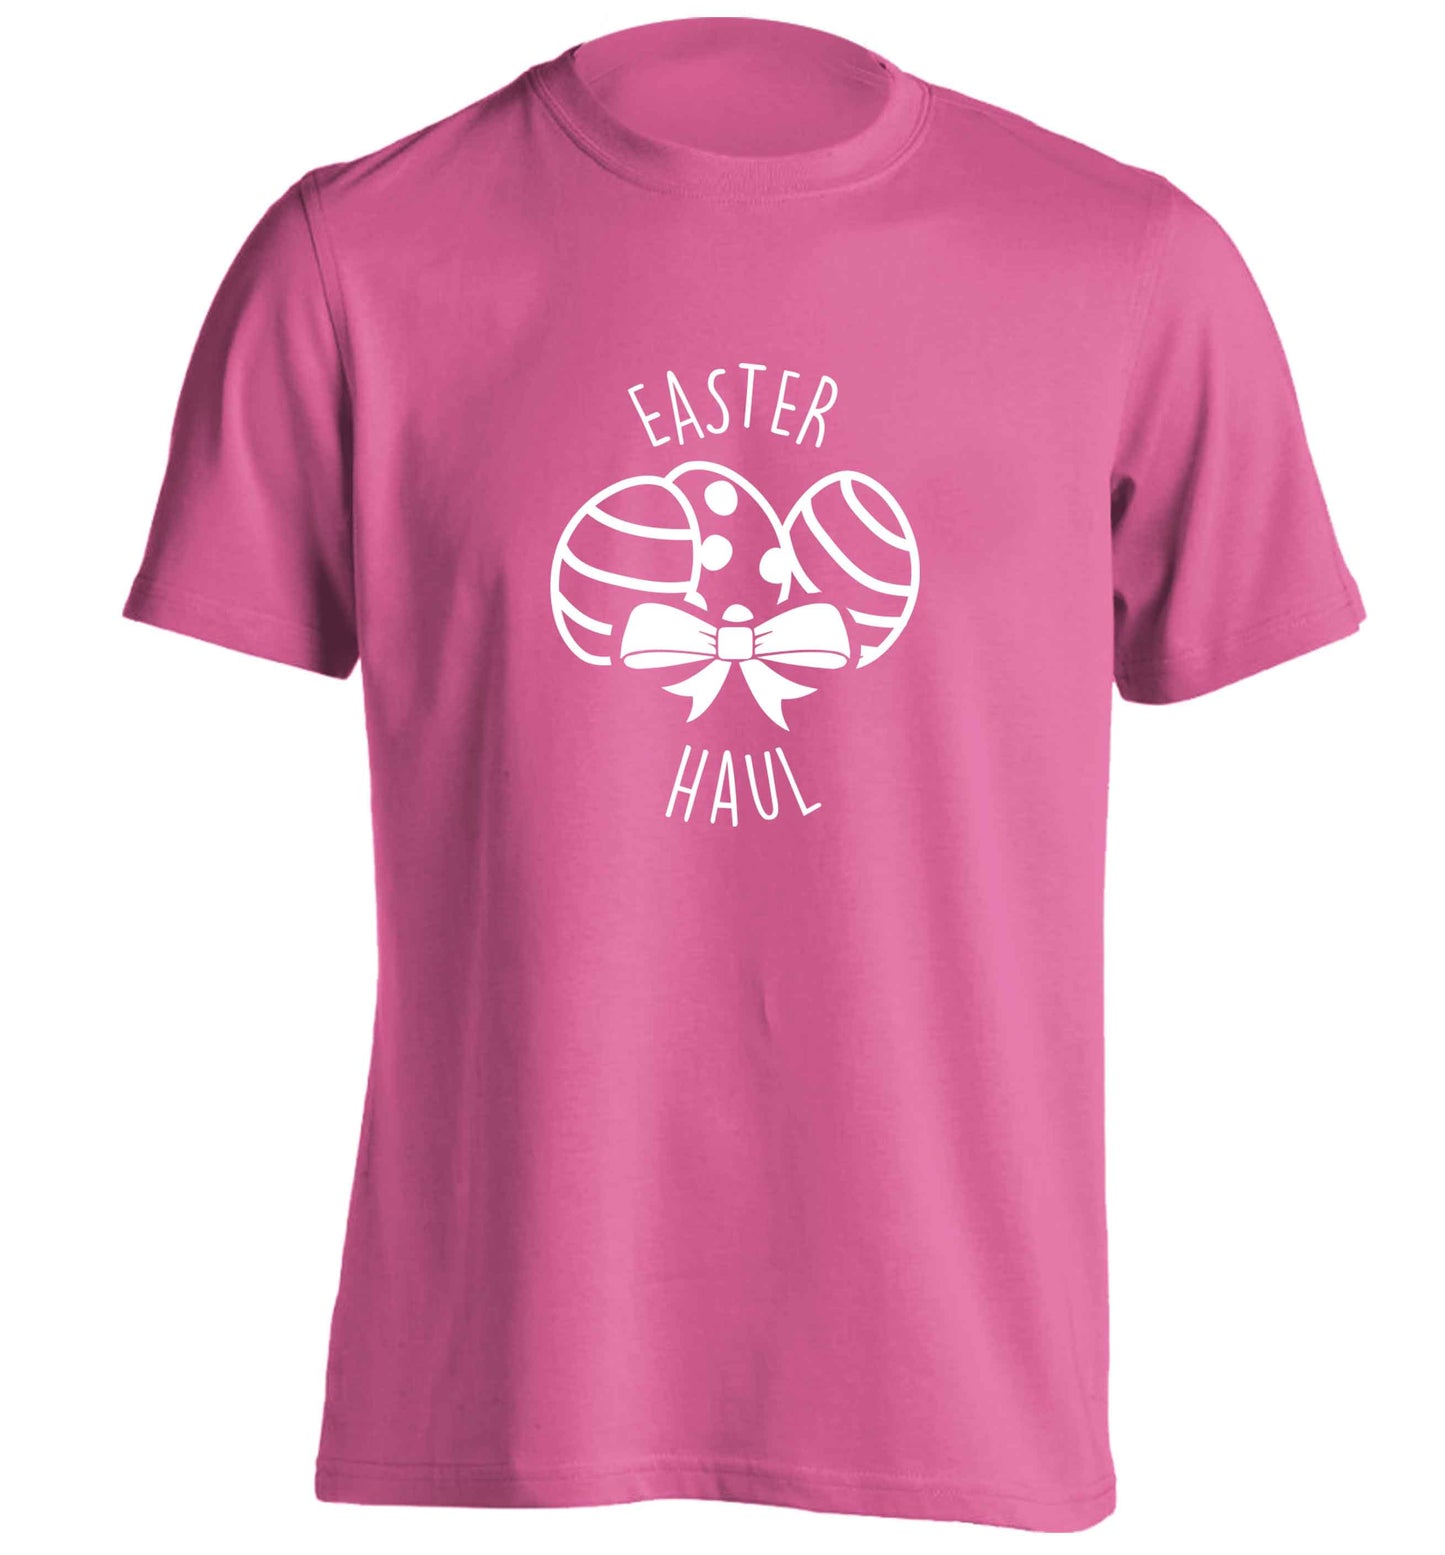 Easter haul adults unisex pink Tshirt 2XL